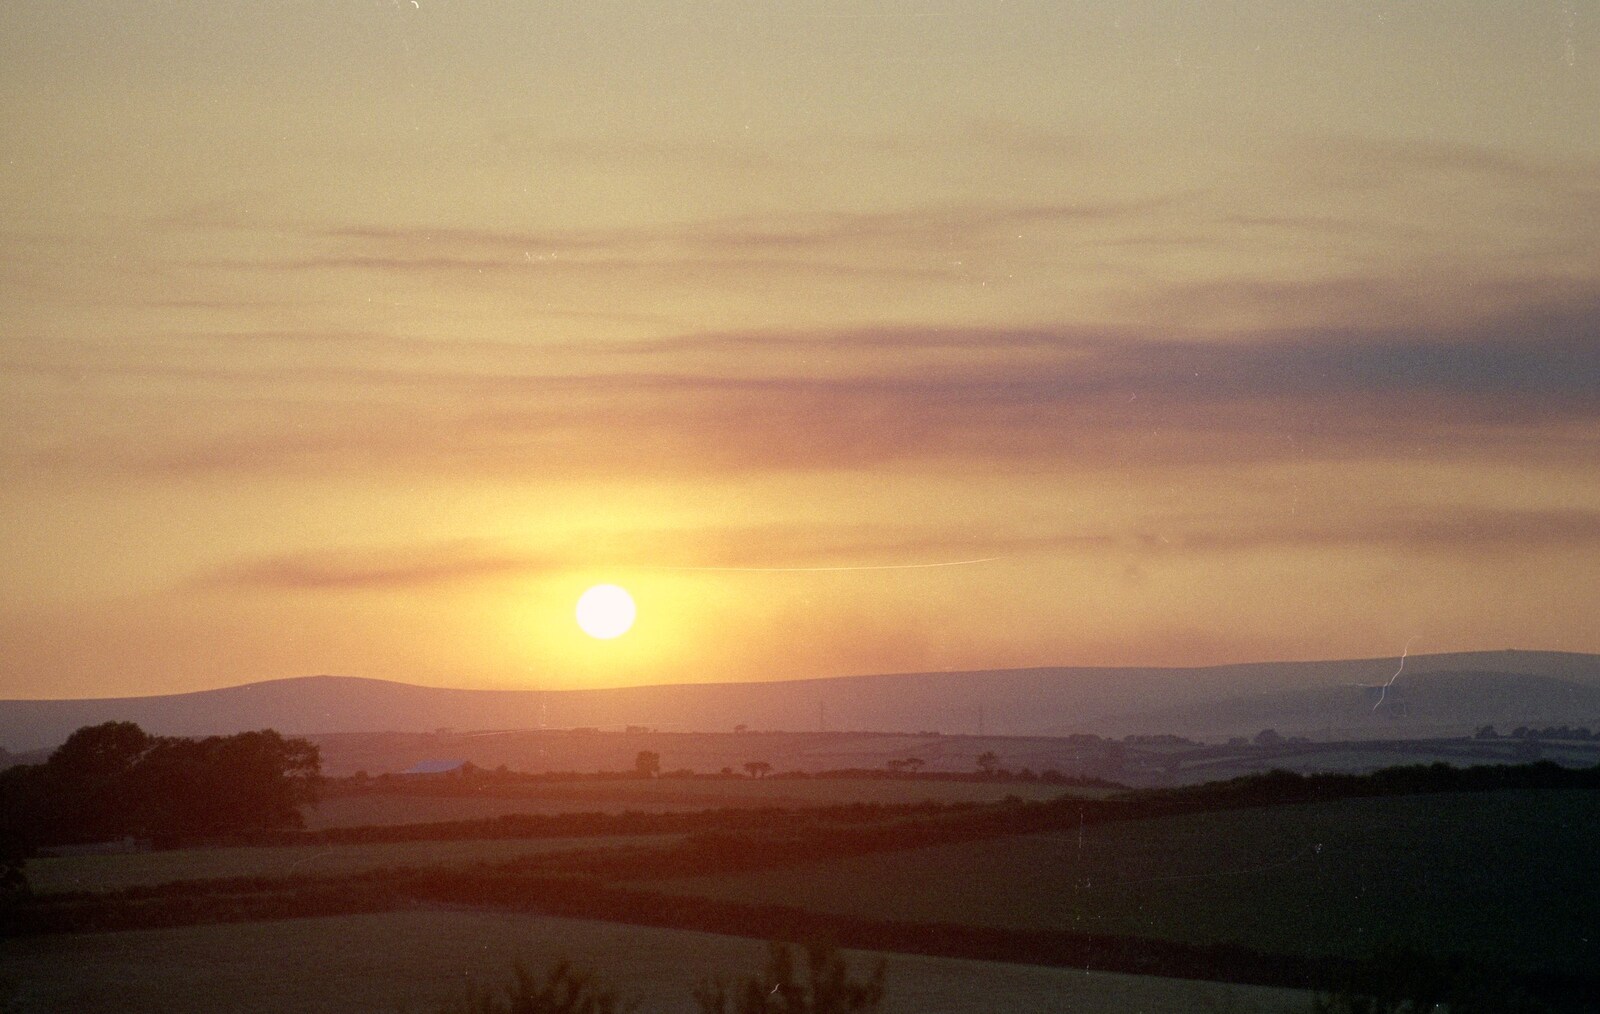 Rolling Devon fields in the sunset from Summer Days on Pitt Farm, Harbertonford, Devon - 17th July 1989